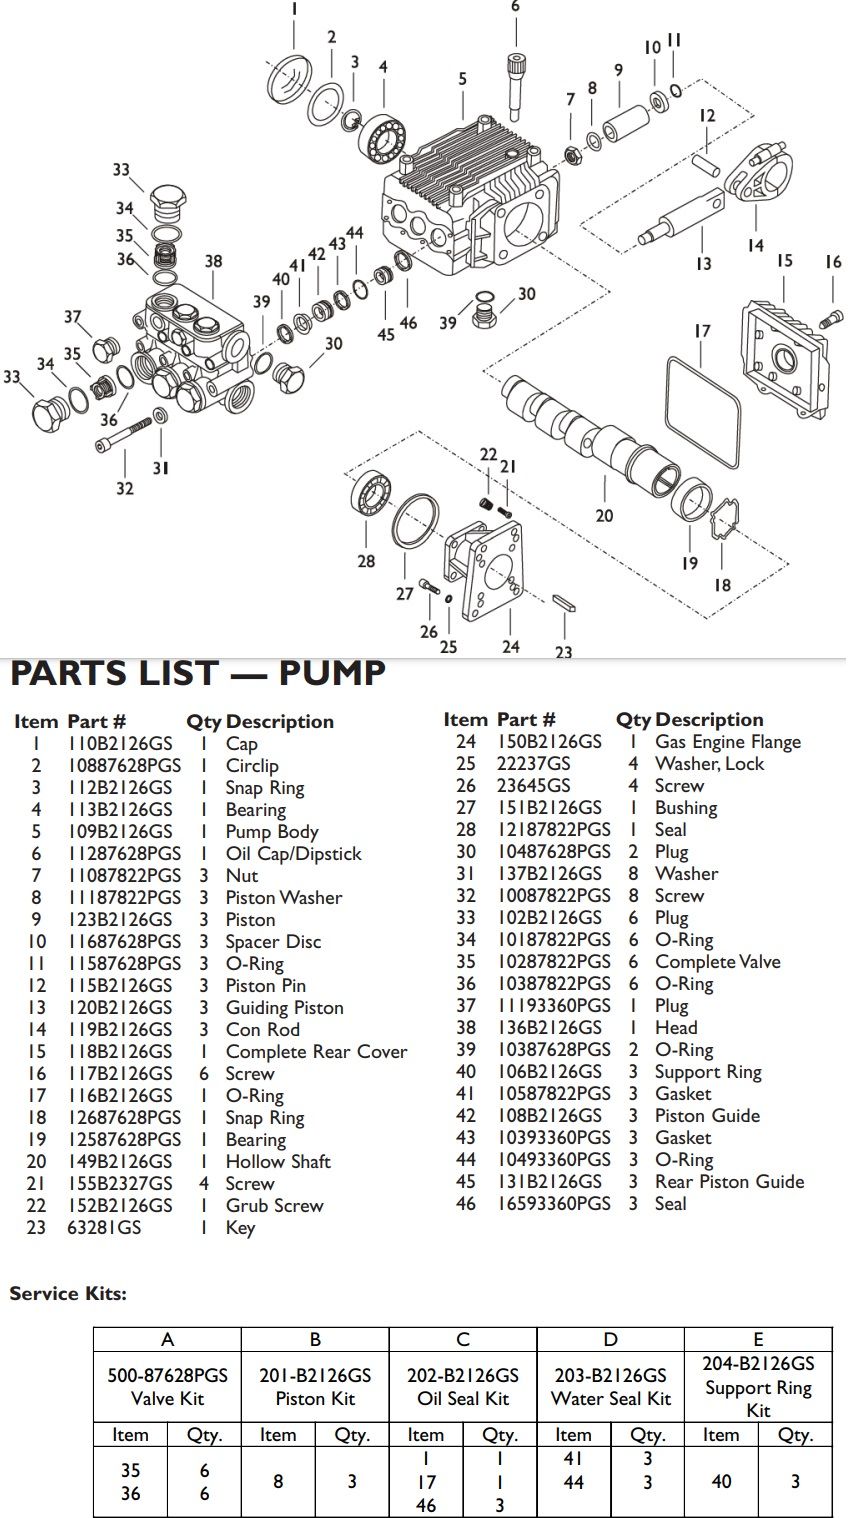 1418-2 pump breakdown, Generac model 1418-2 replacement pump parts